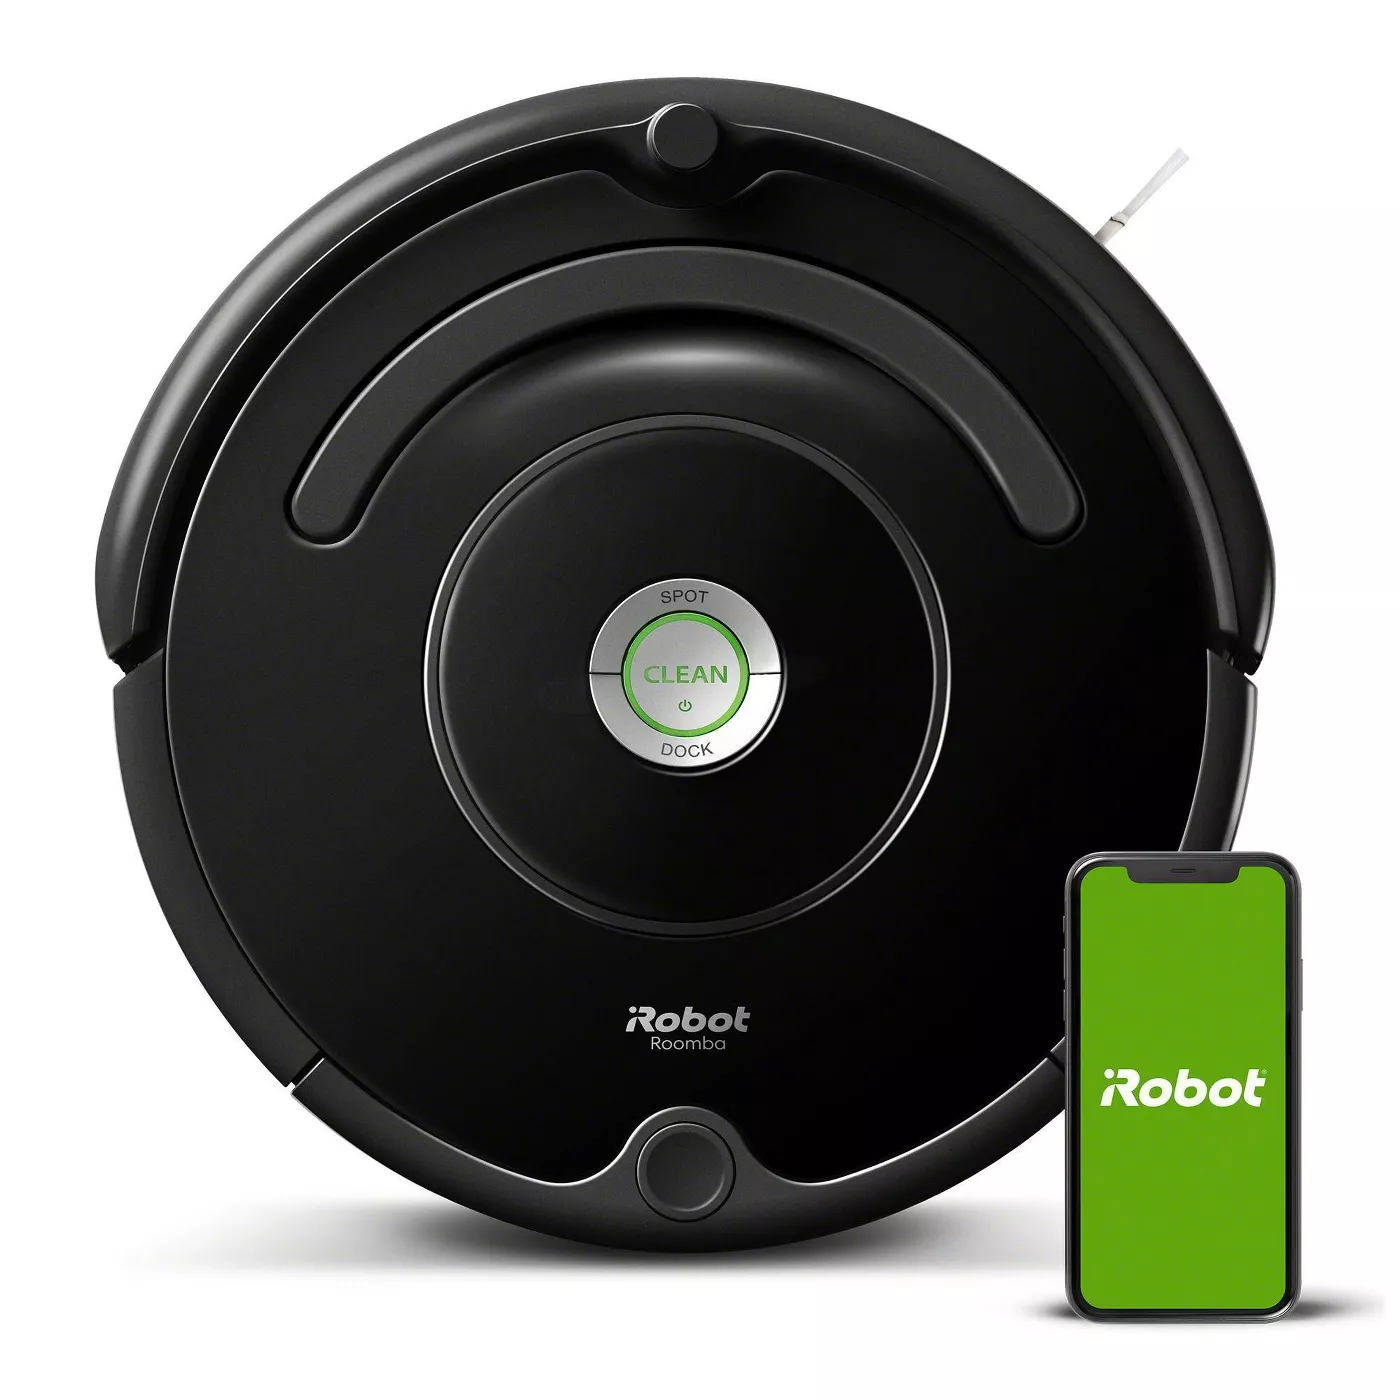 iRobot Roomba 675 Wi-Fi Connected Robot Vacuum $174.99